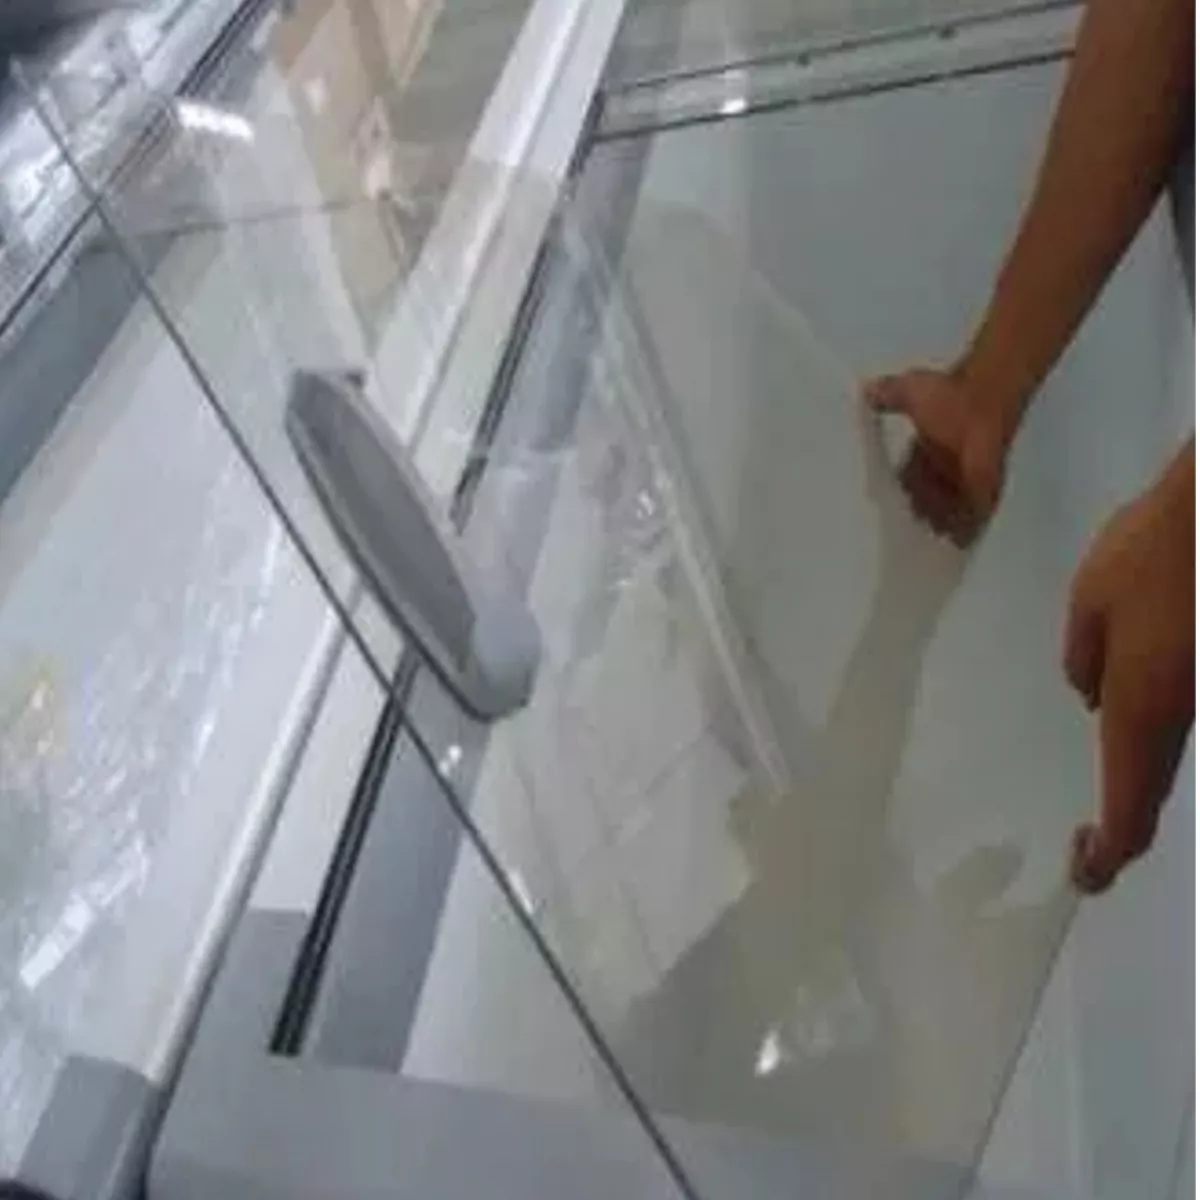 Segunda imagem para pesquisa de tampa vidro ilha fricon